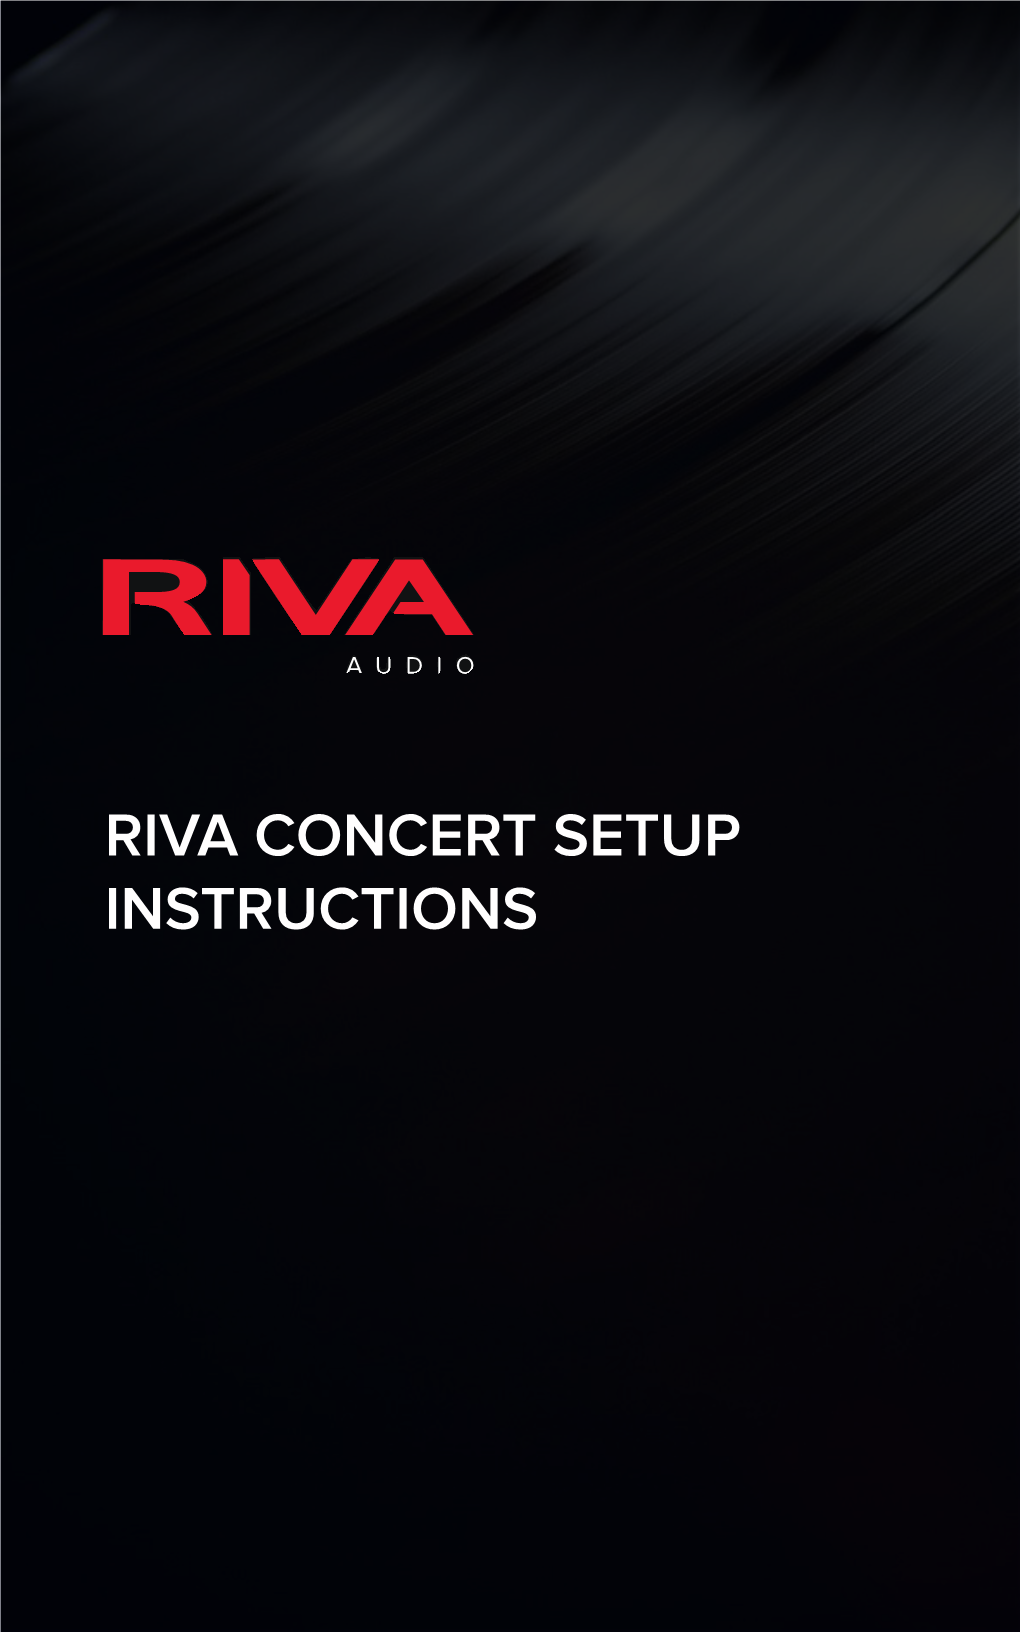 Riva Concert Setup Instructions Contents